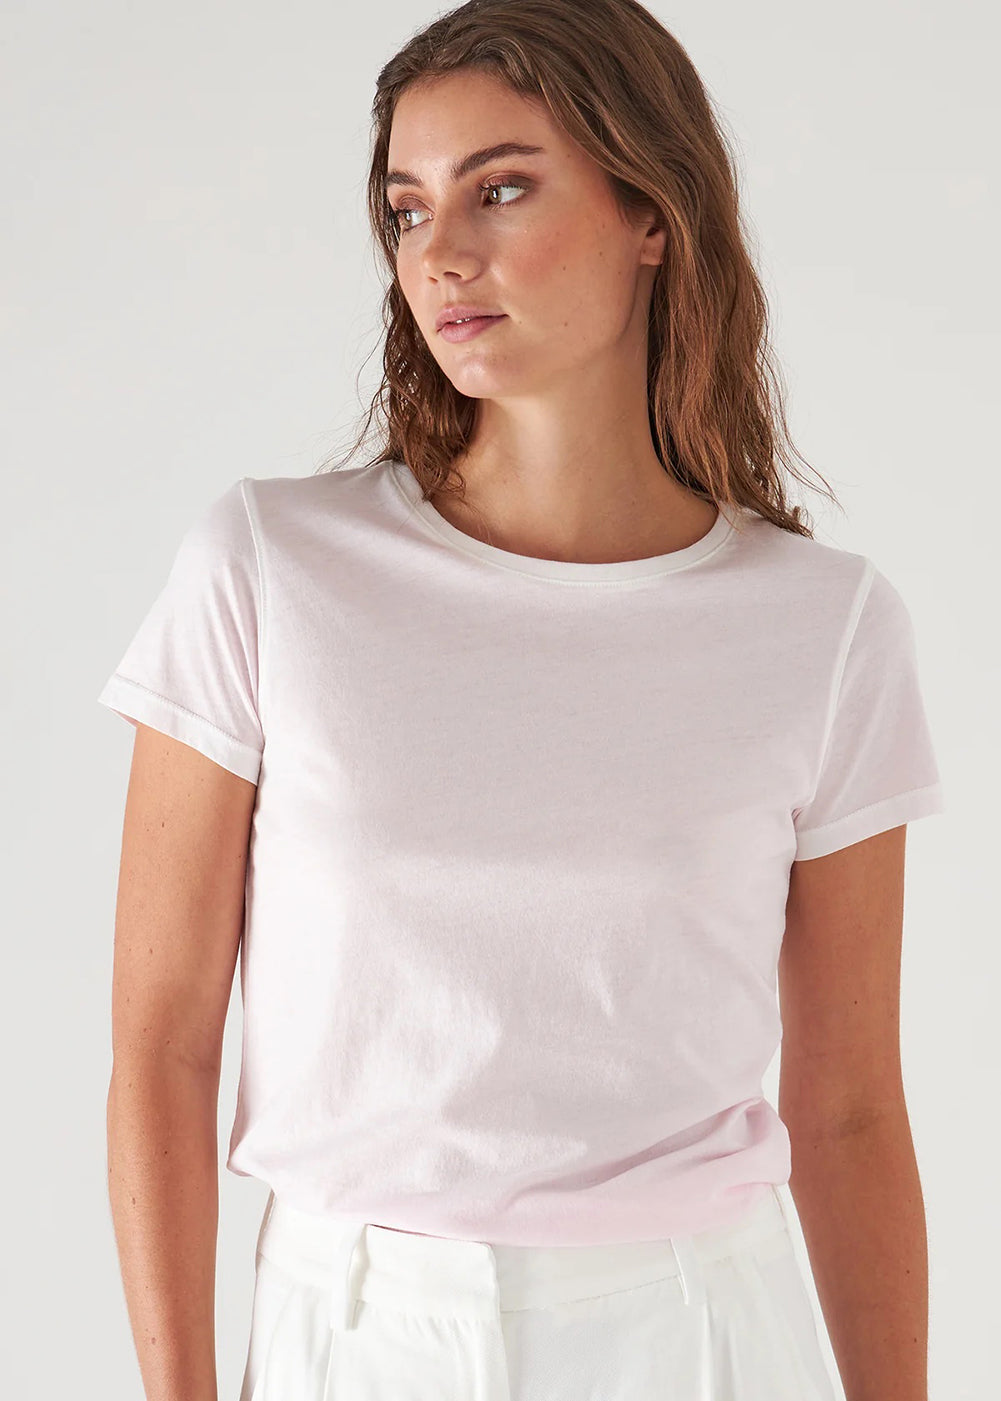 Reverse Spray Lightweight Pima Cotton T-Shirt - Pink - Patrick Assaraf Canada - Danali -W92C19X